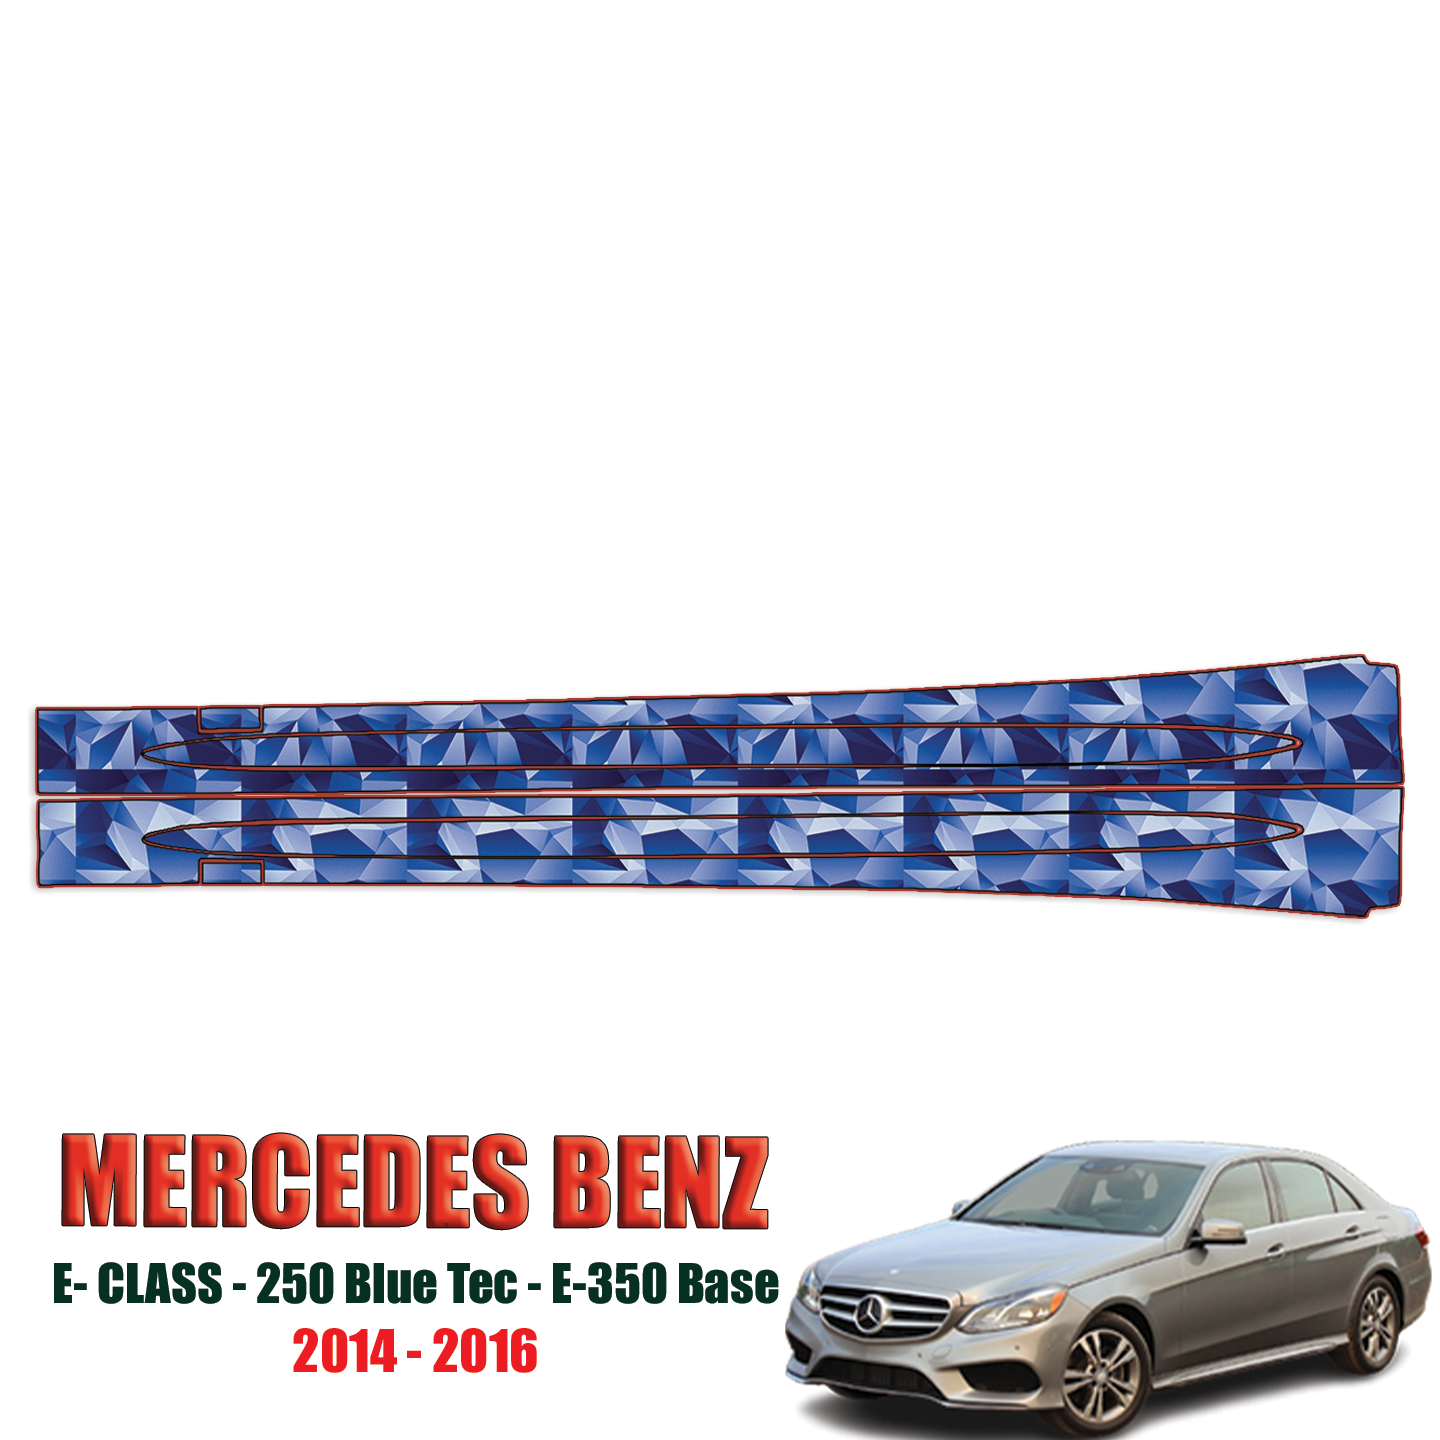 2014-2016 Mercedes Benz E-Class 250 Blue Tec, E 350 Base Precut Paint Protection Kit – Rocker Panels